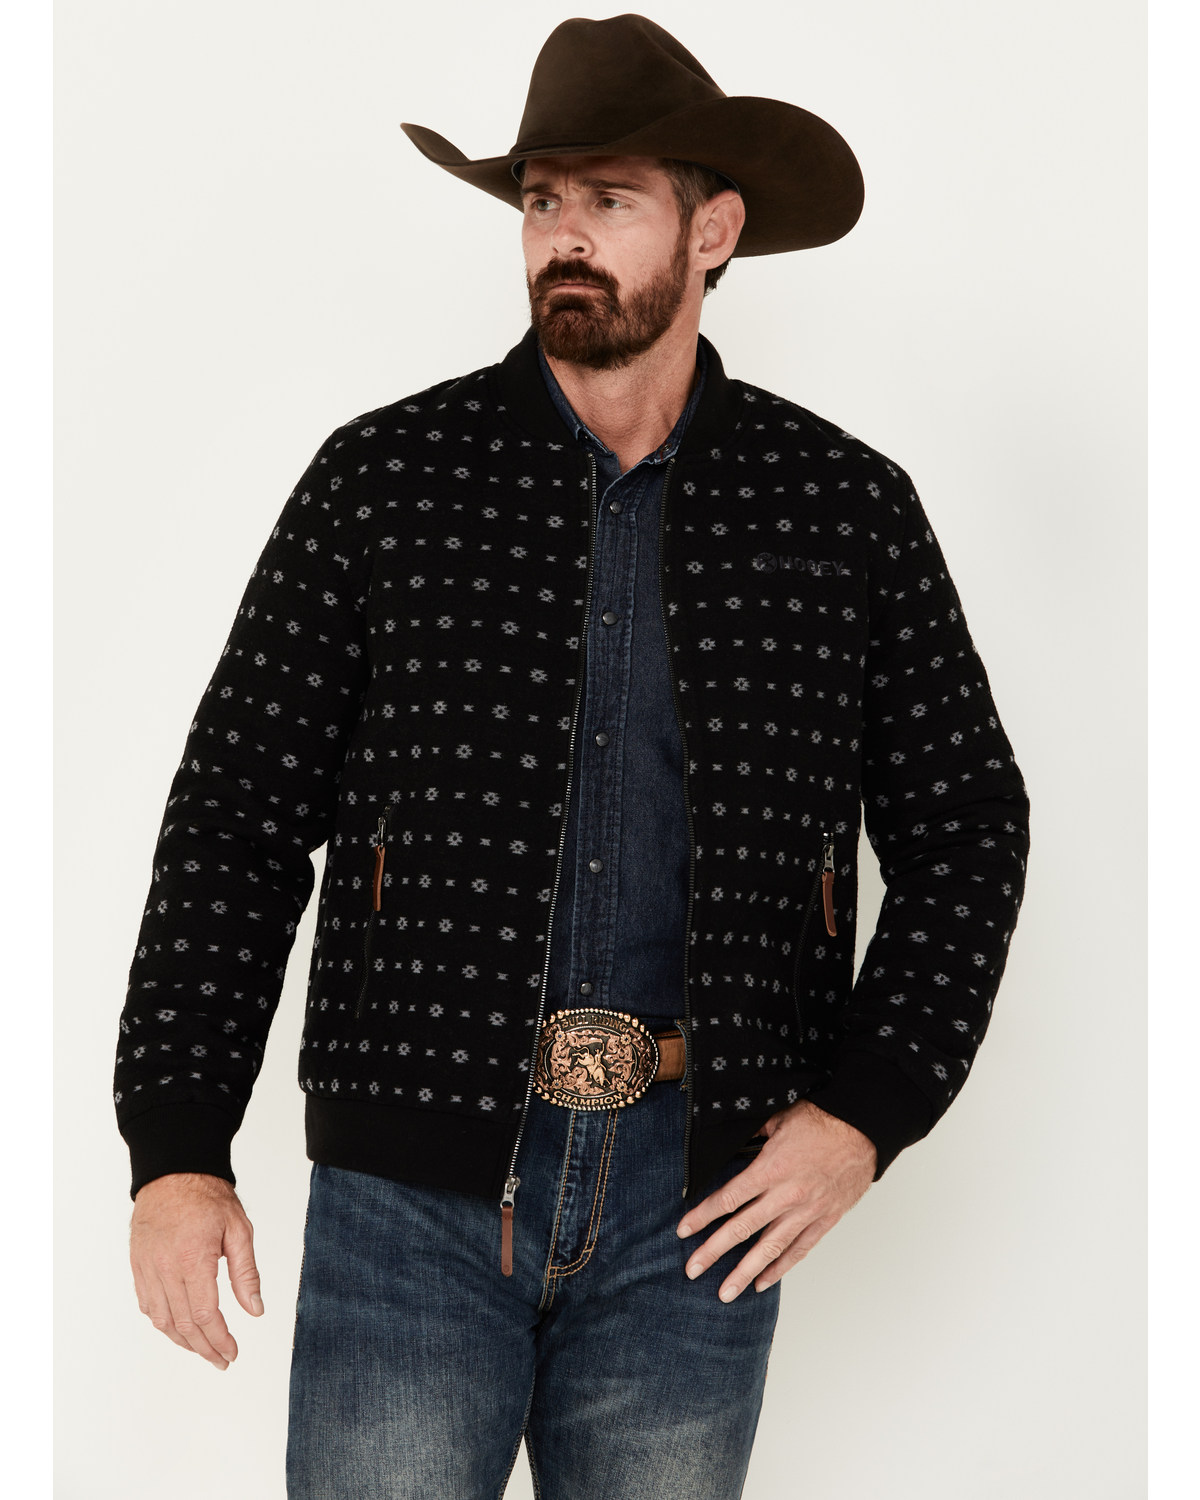 Hooey Men's Southwestern Print Wool Jacket